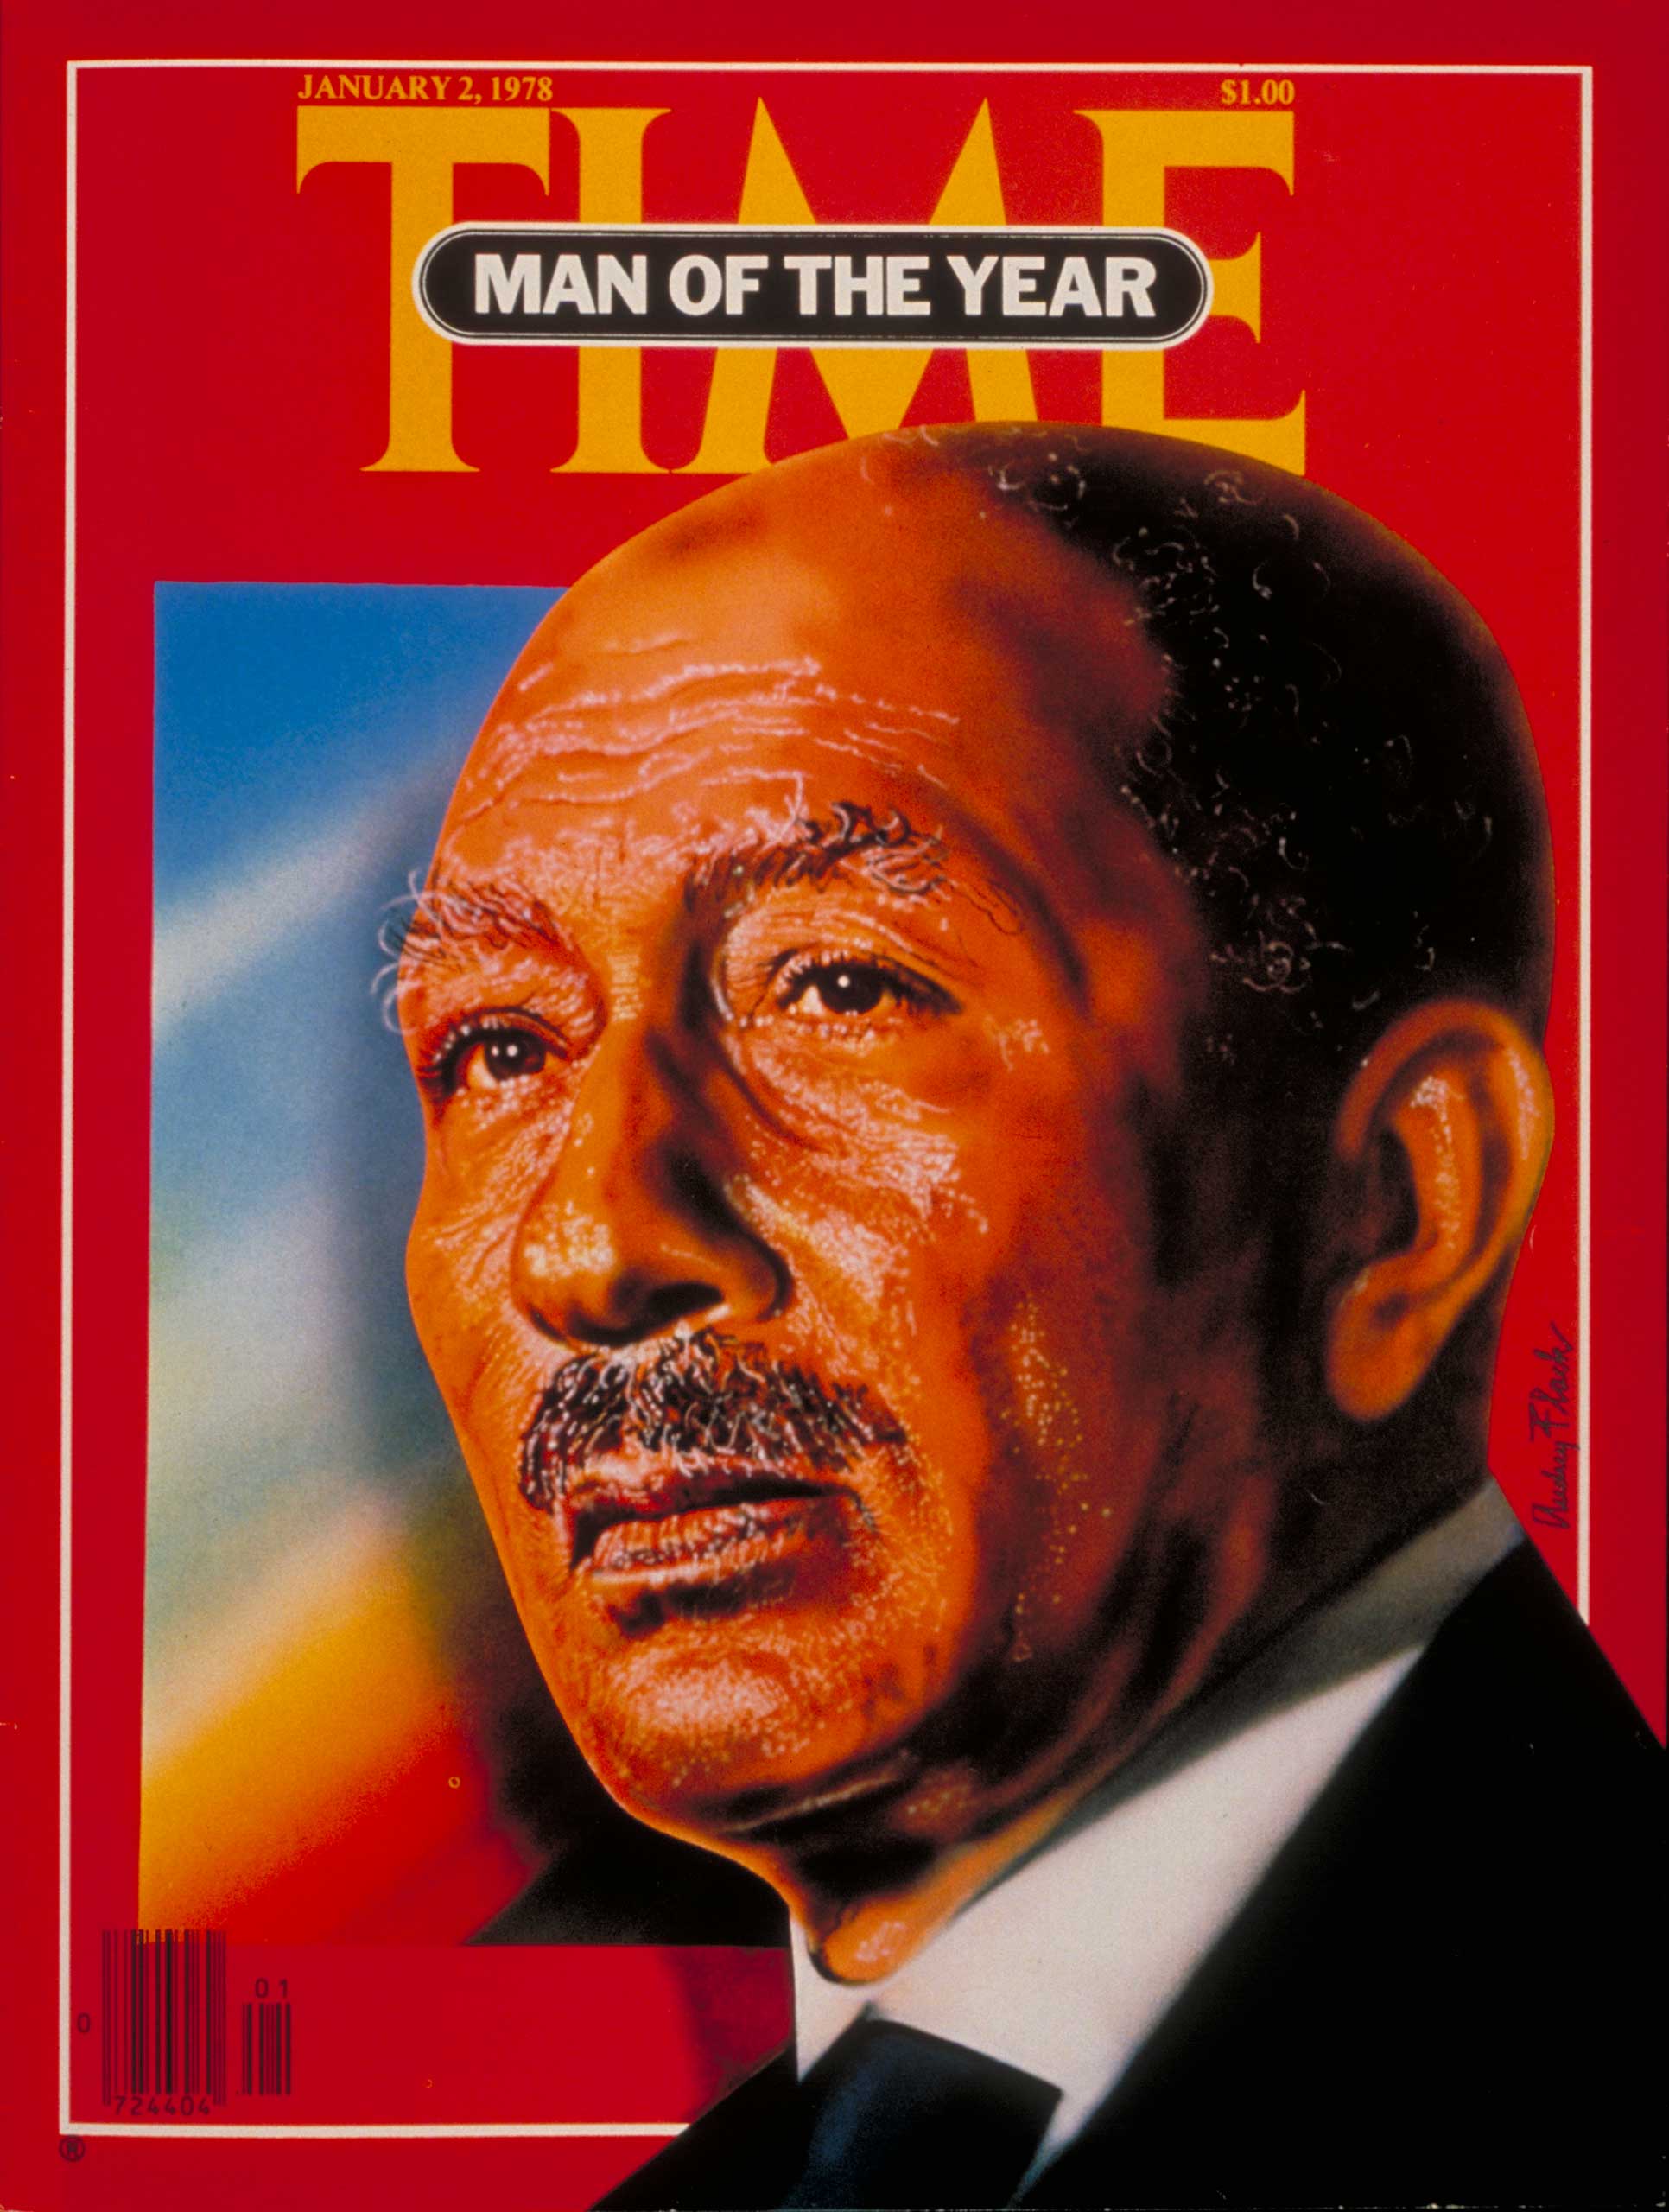 1977: Anwar Sadat